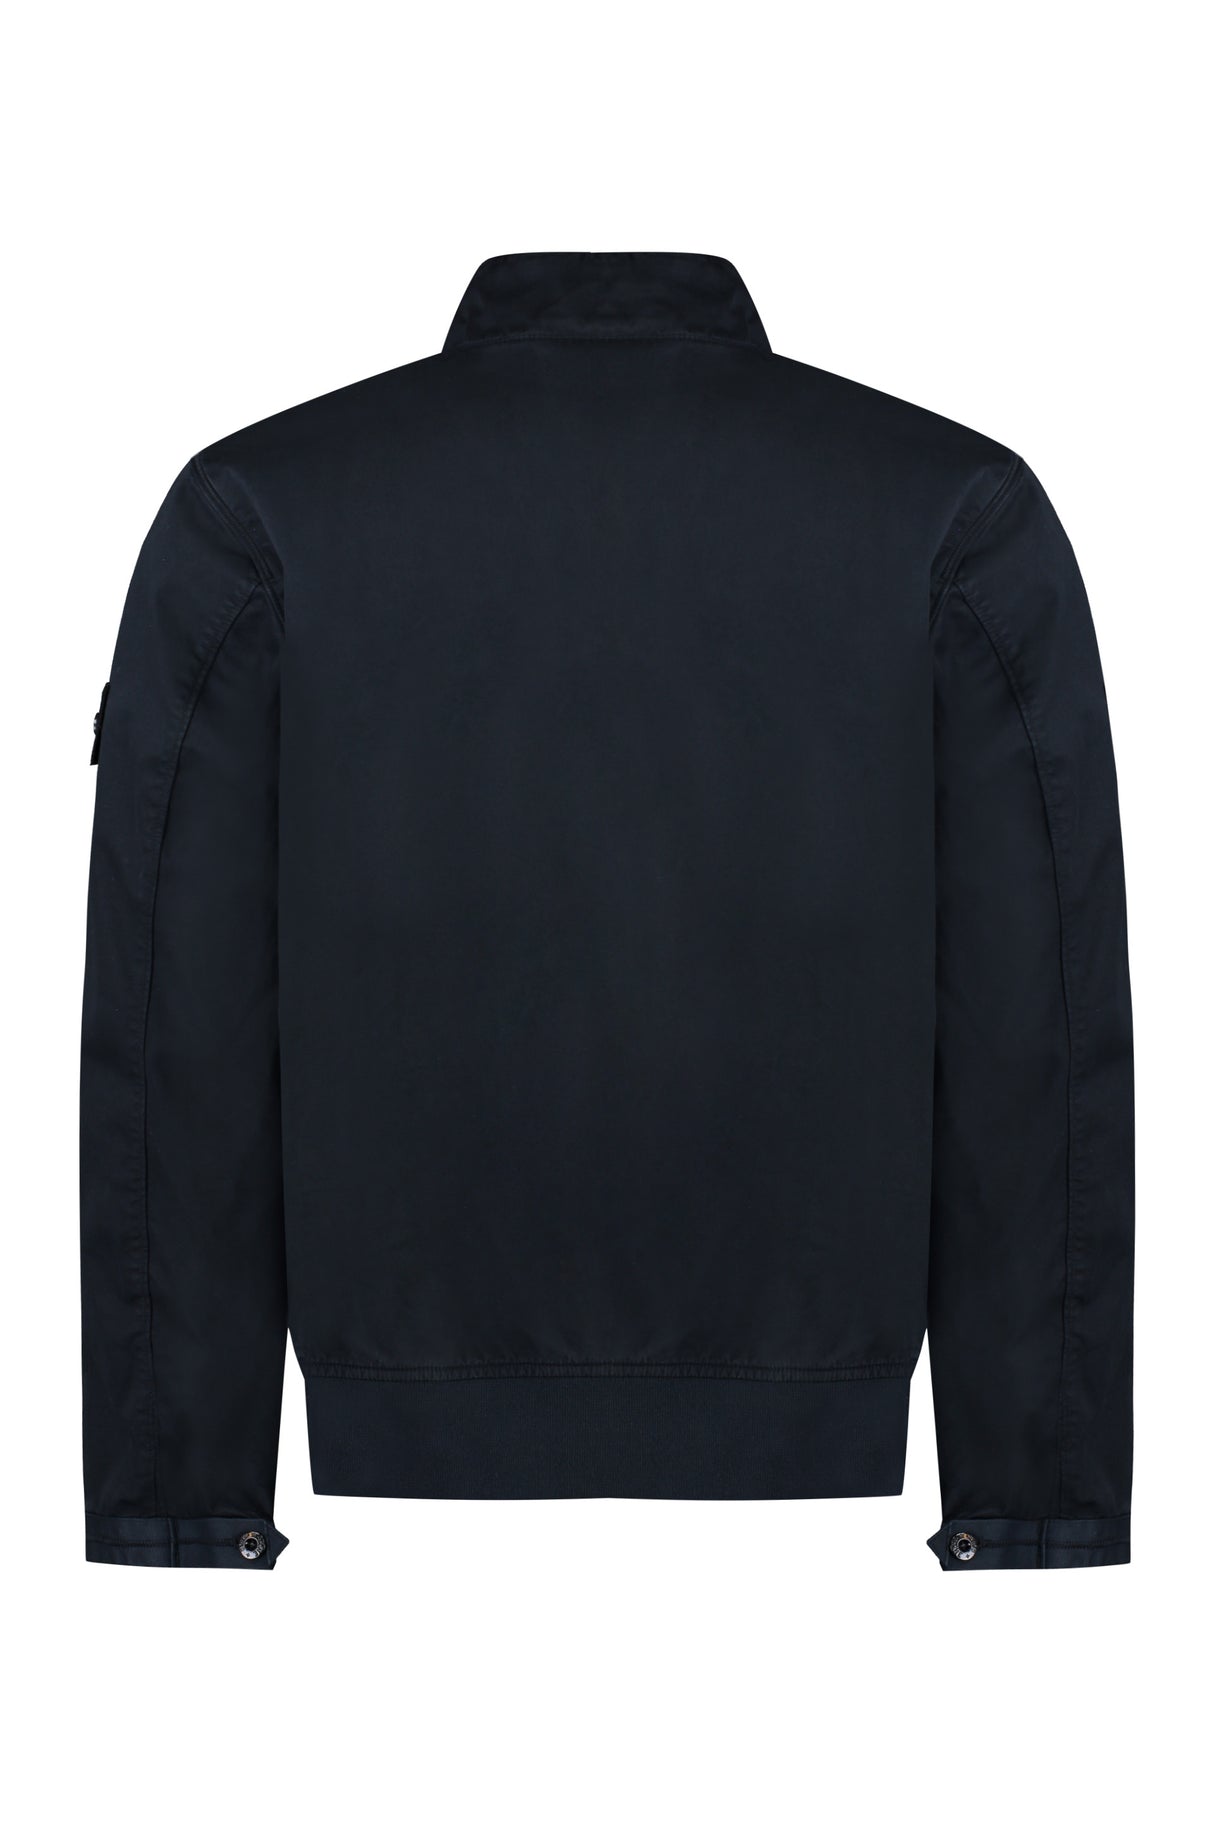 STONE ISLAND Navy Zippered Cotton Jacket for Men